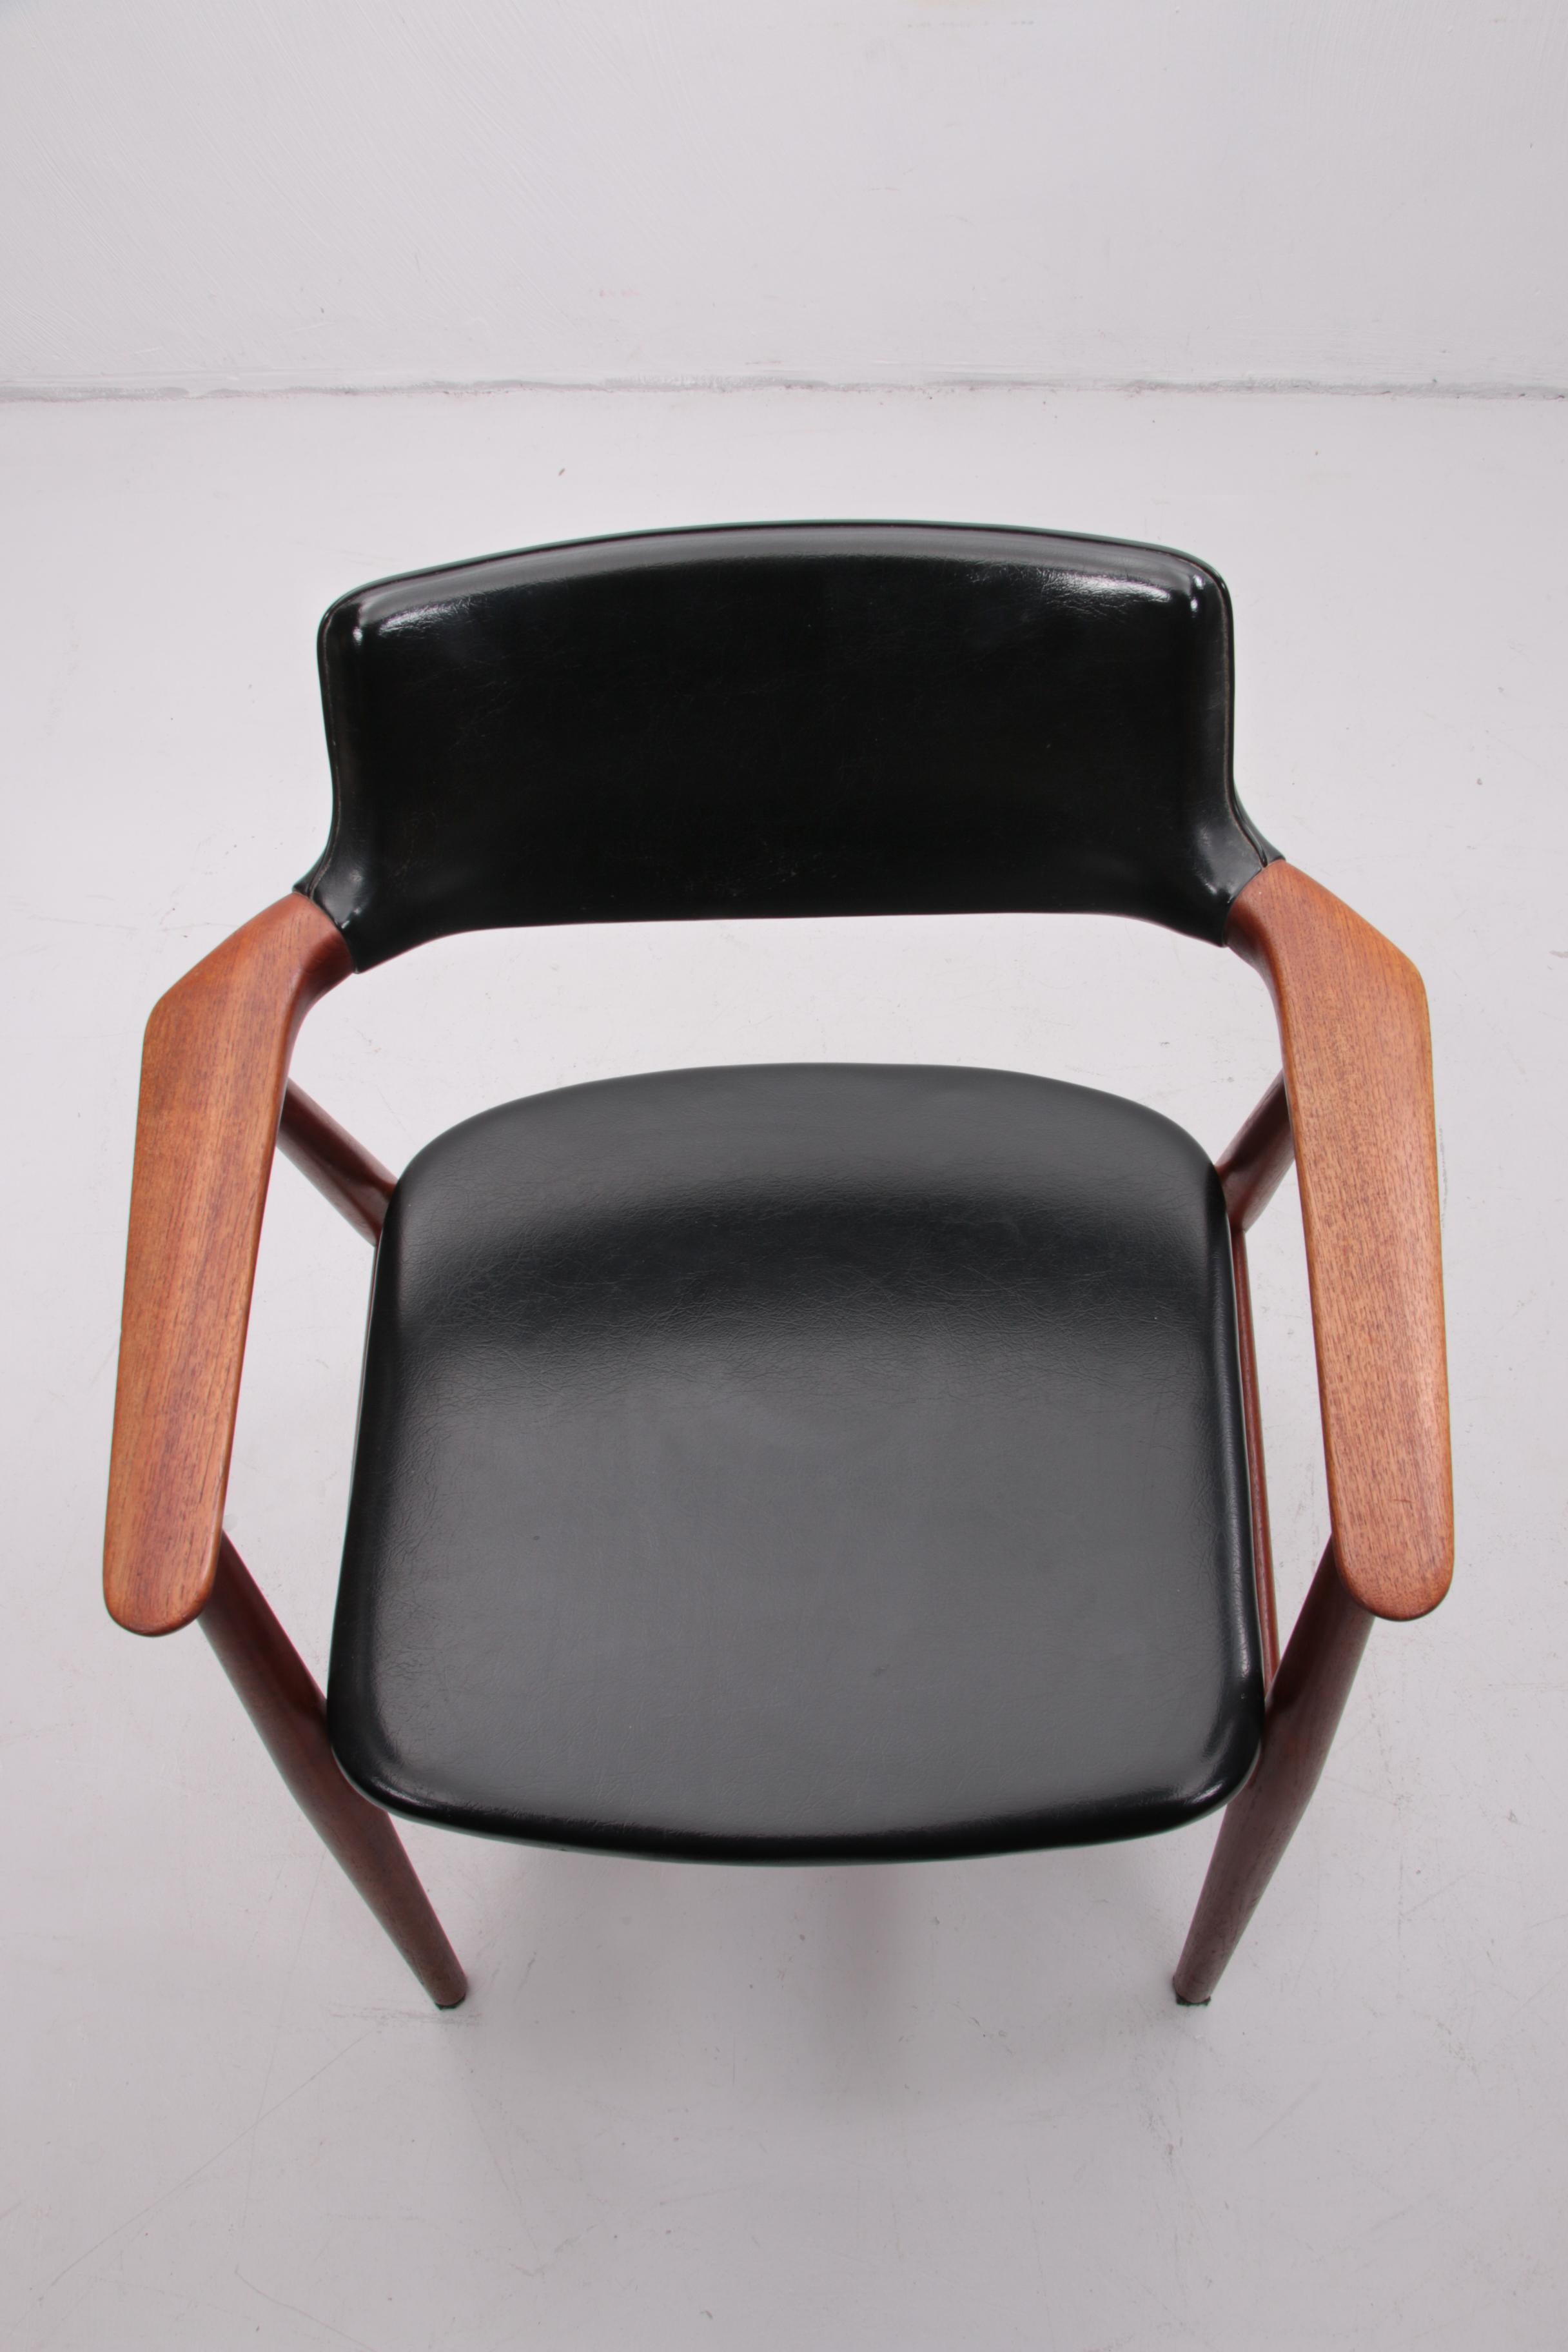 Svend Age Eriksen Dining Room Chair Model Gm11, 1960 For Sale 4